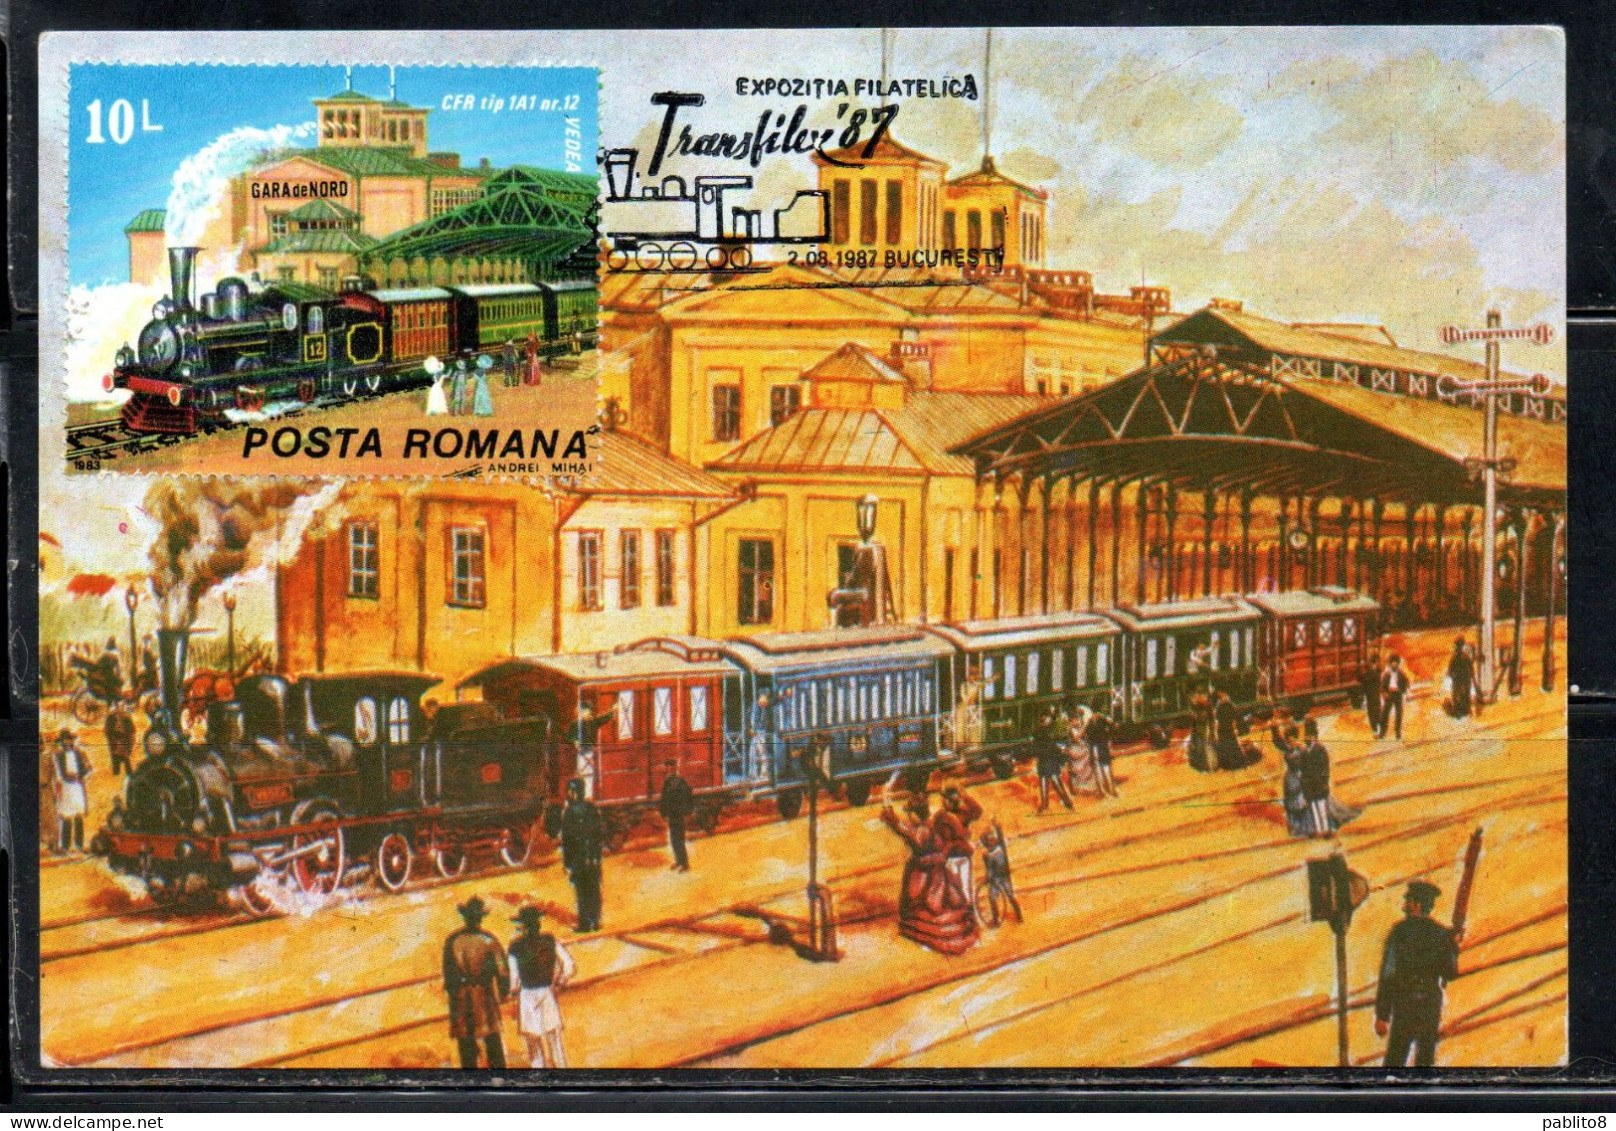 ROMANIA 1983  TRAIN STATION LEAVING GARE DE NORD CFR 1A1 ORIENT EXPRESS CENTENARY 10L MAXI MAXIMUM CARD - Maximumkaarten